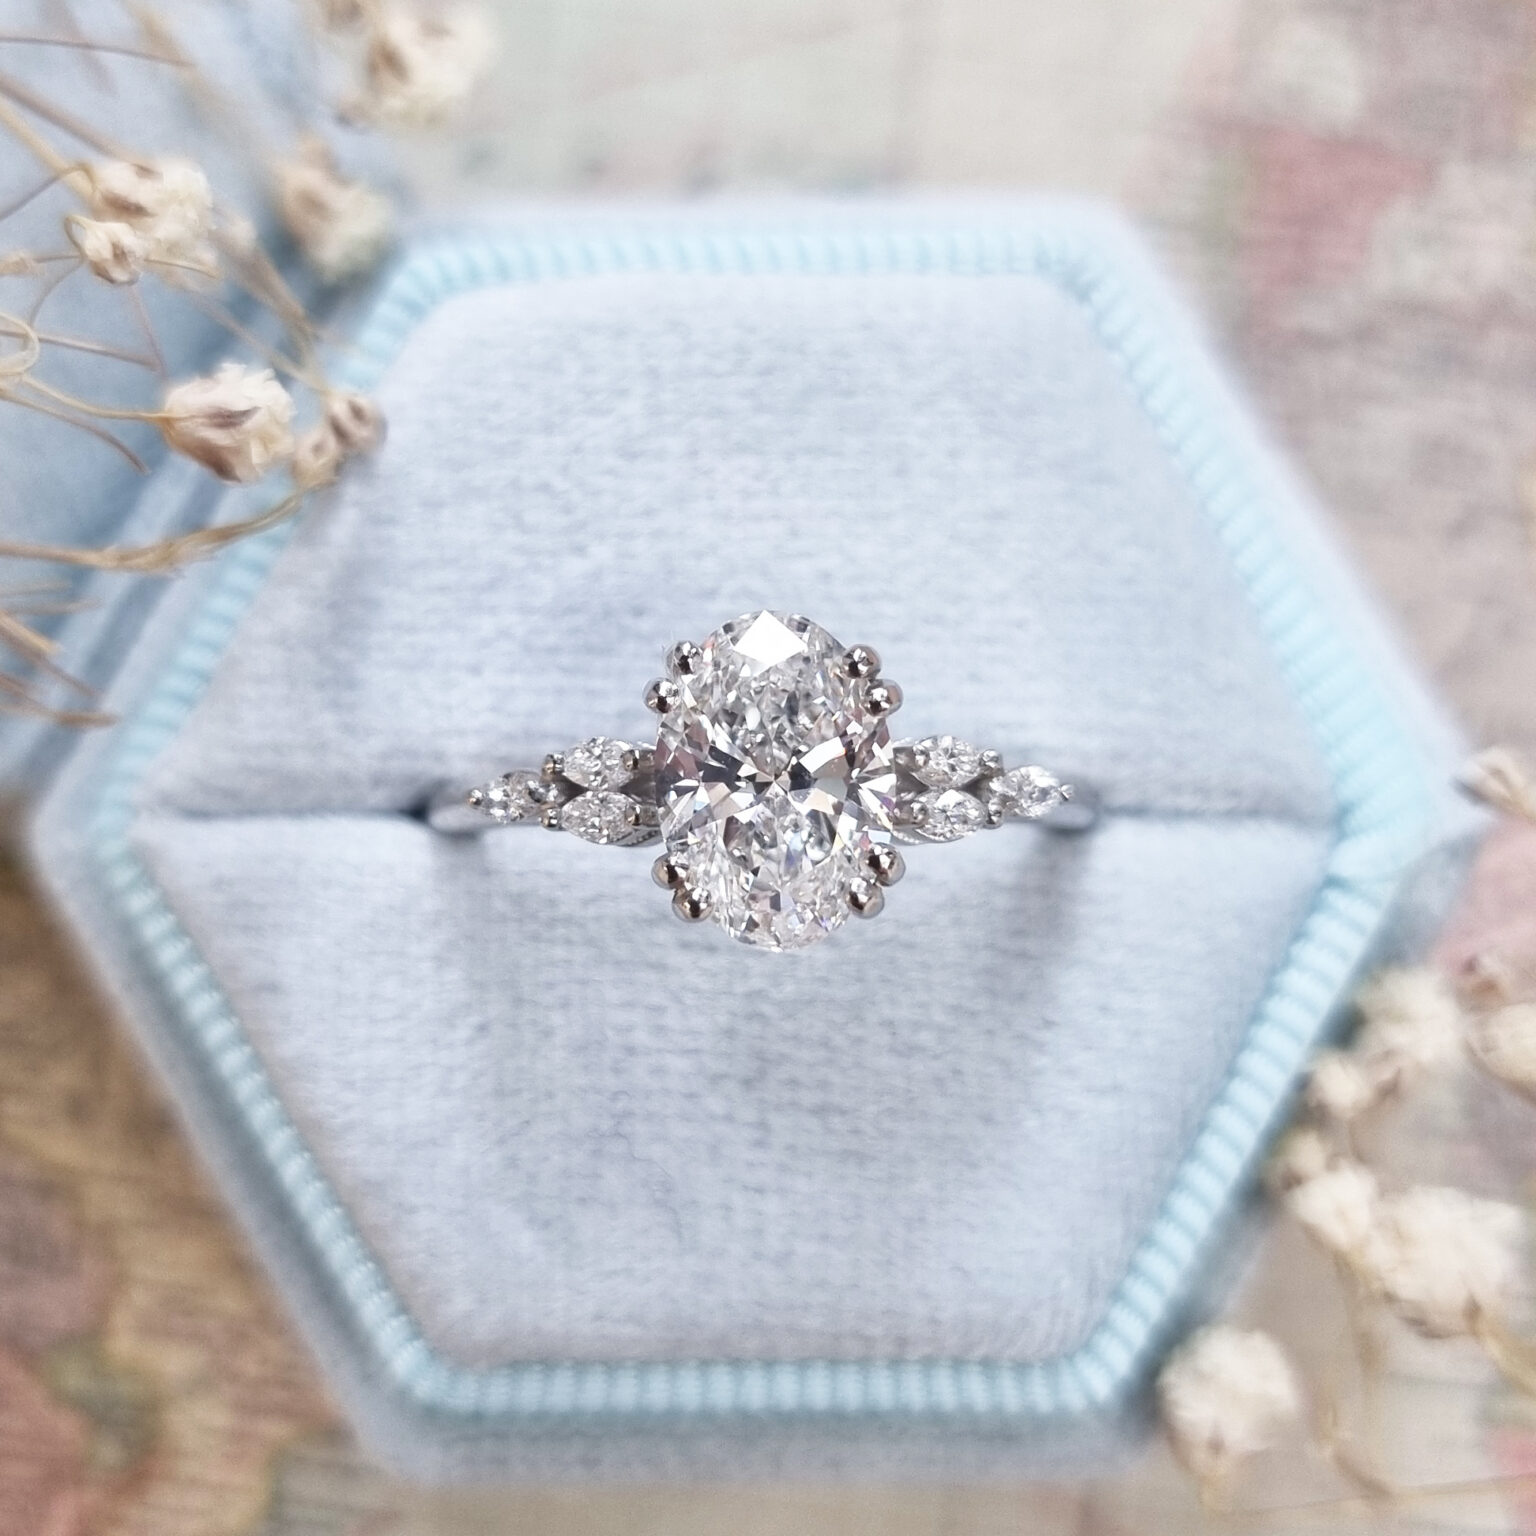 Aardvark Jewellery – Unique handmade engagement rings